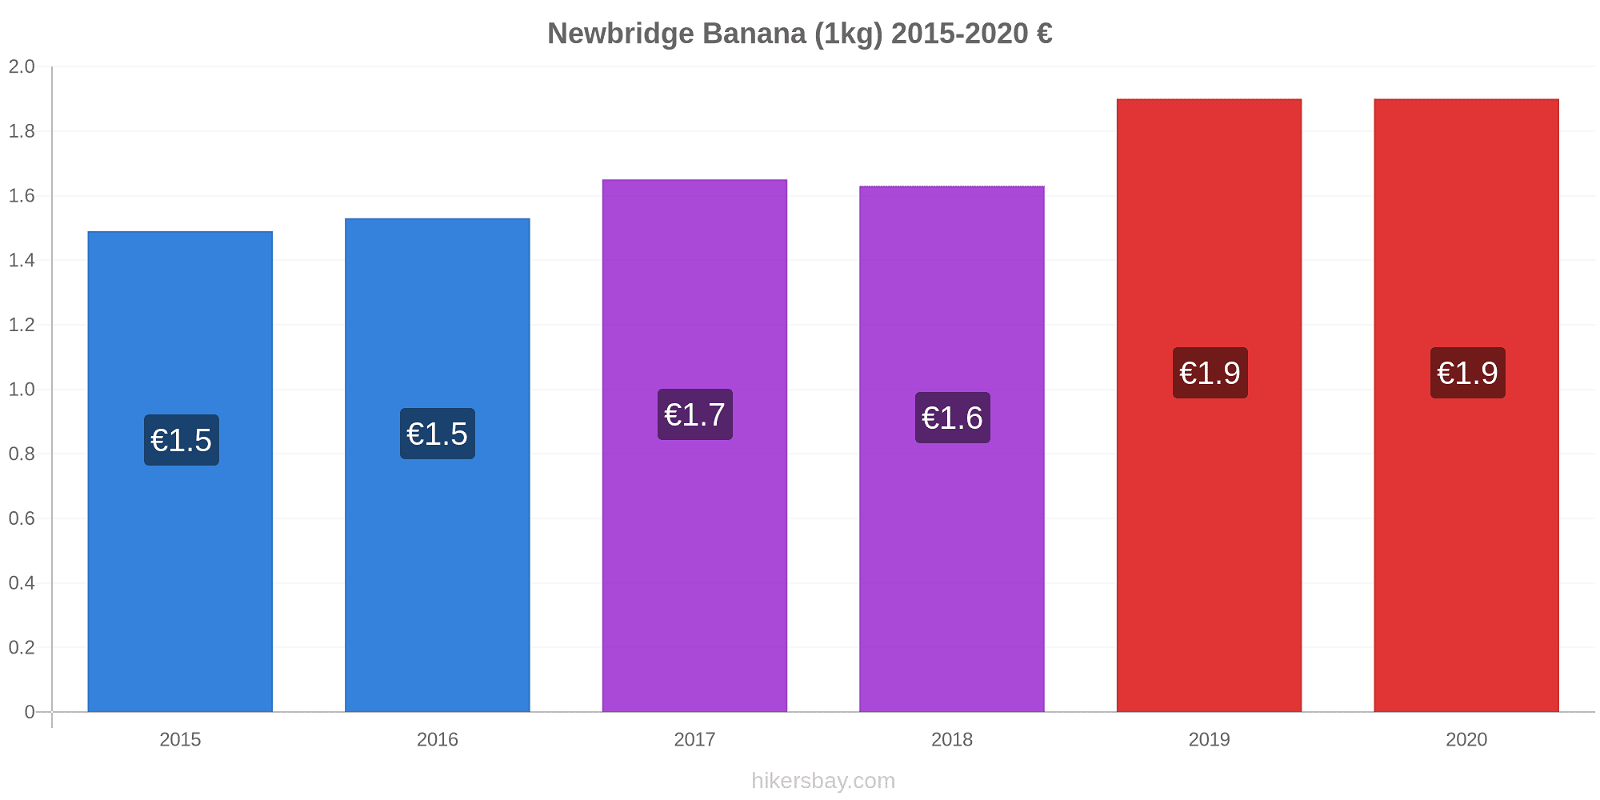 Newbridge modificări de preț Banana (1kg) hikersbay.com